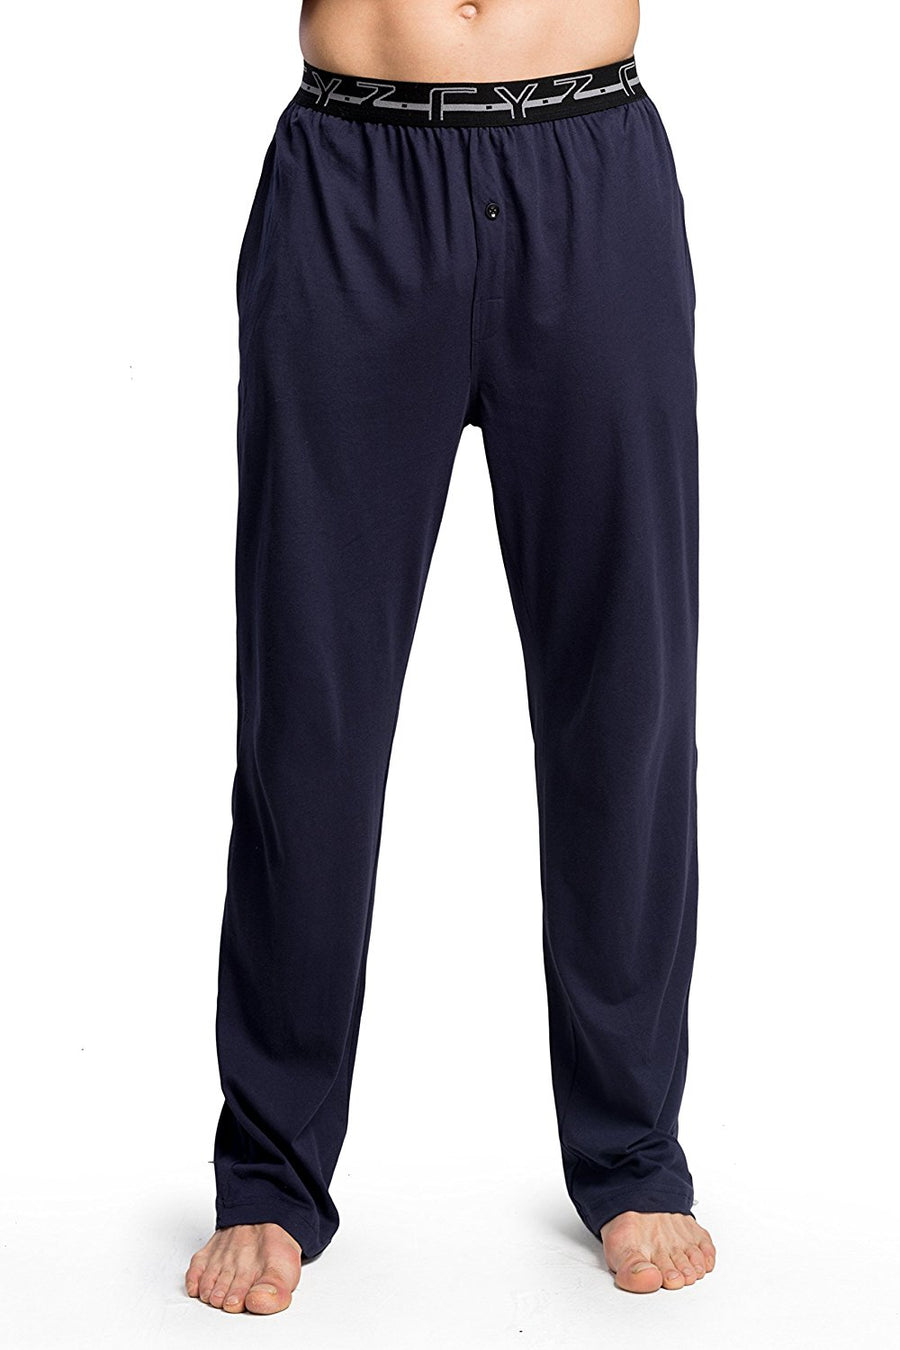 Buy CYZ Men's 100% Cotton Poplin Pajama Lounge Pant Online at